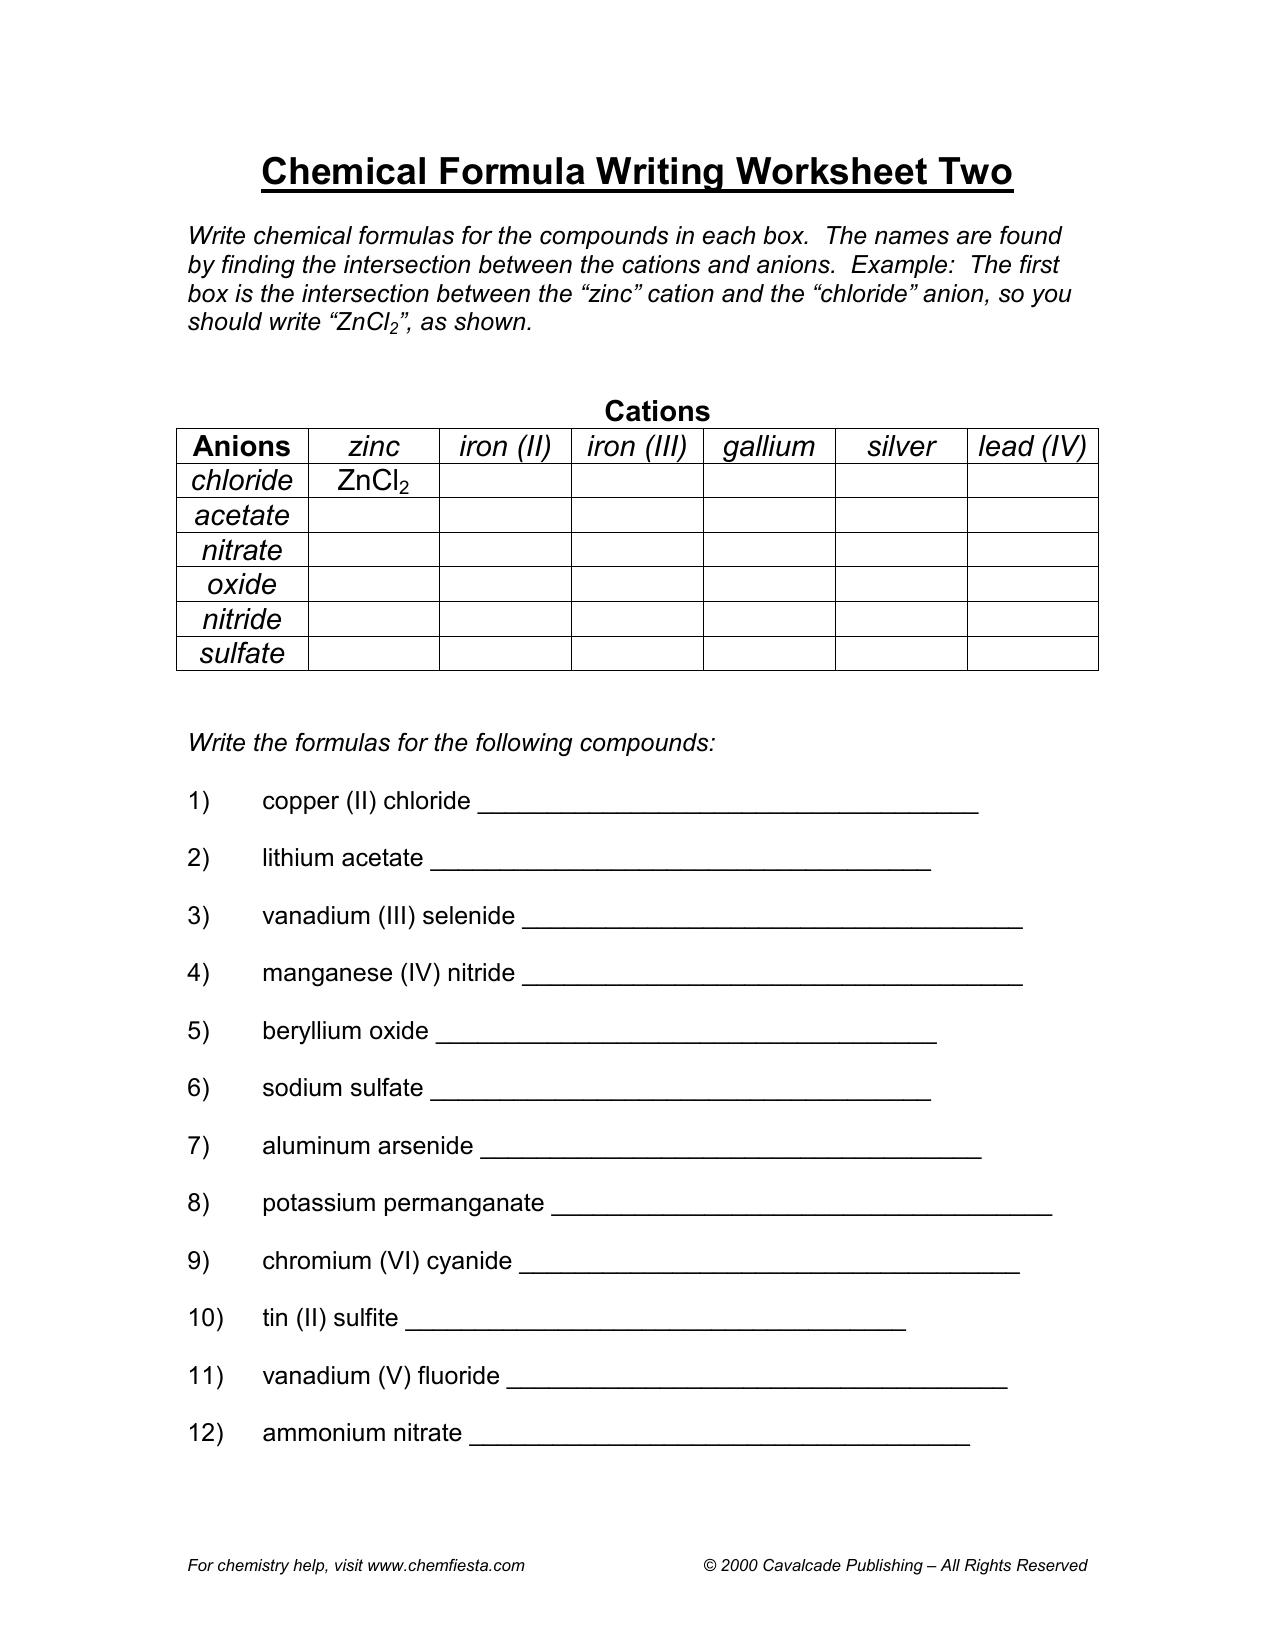 Chemical Formula Writing Worksheet II-revised 24-24 Throughout Chemical Formula Writing Worksheet